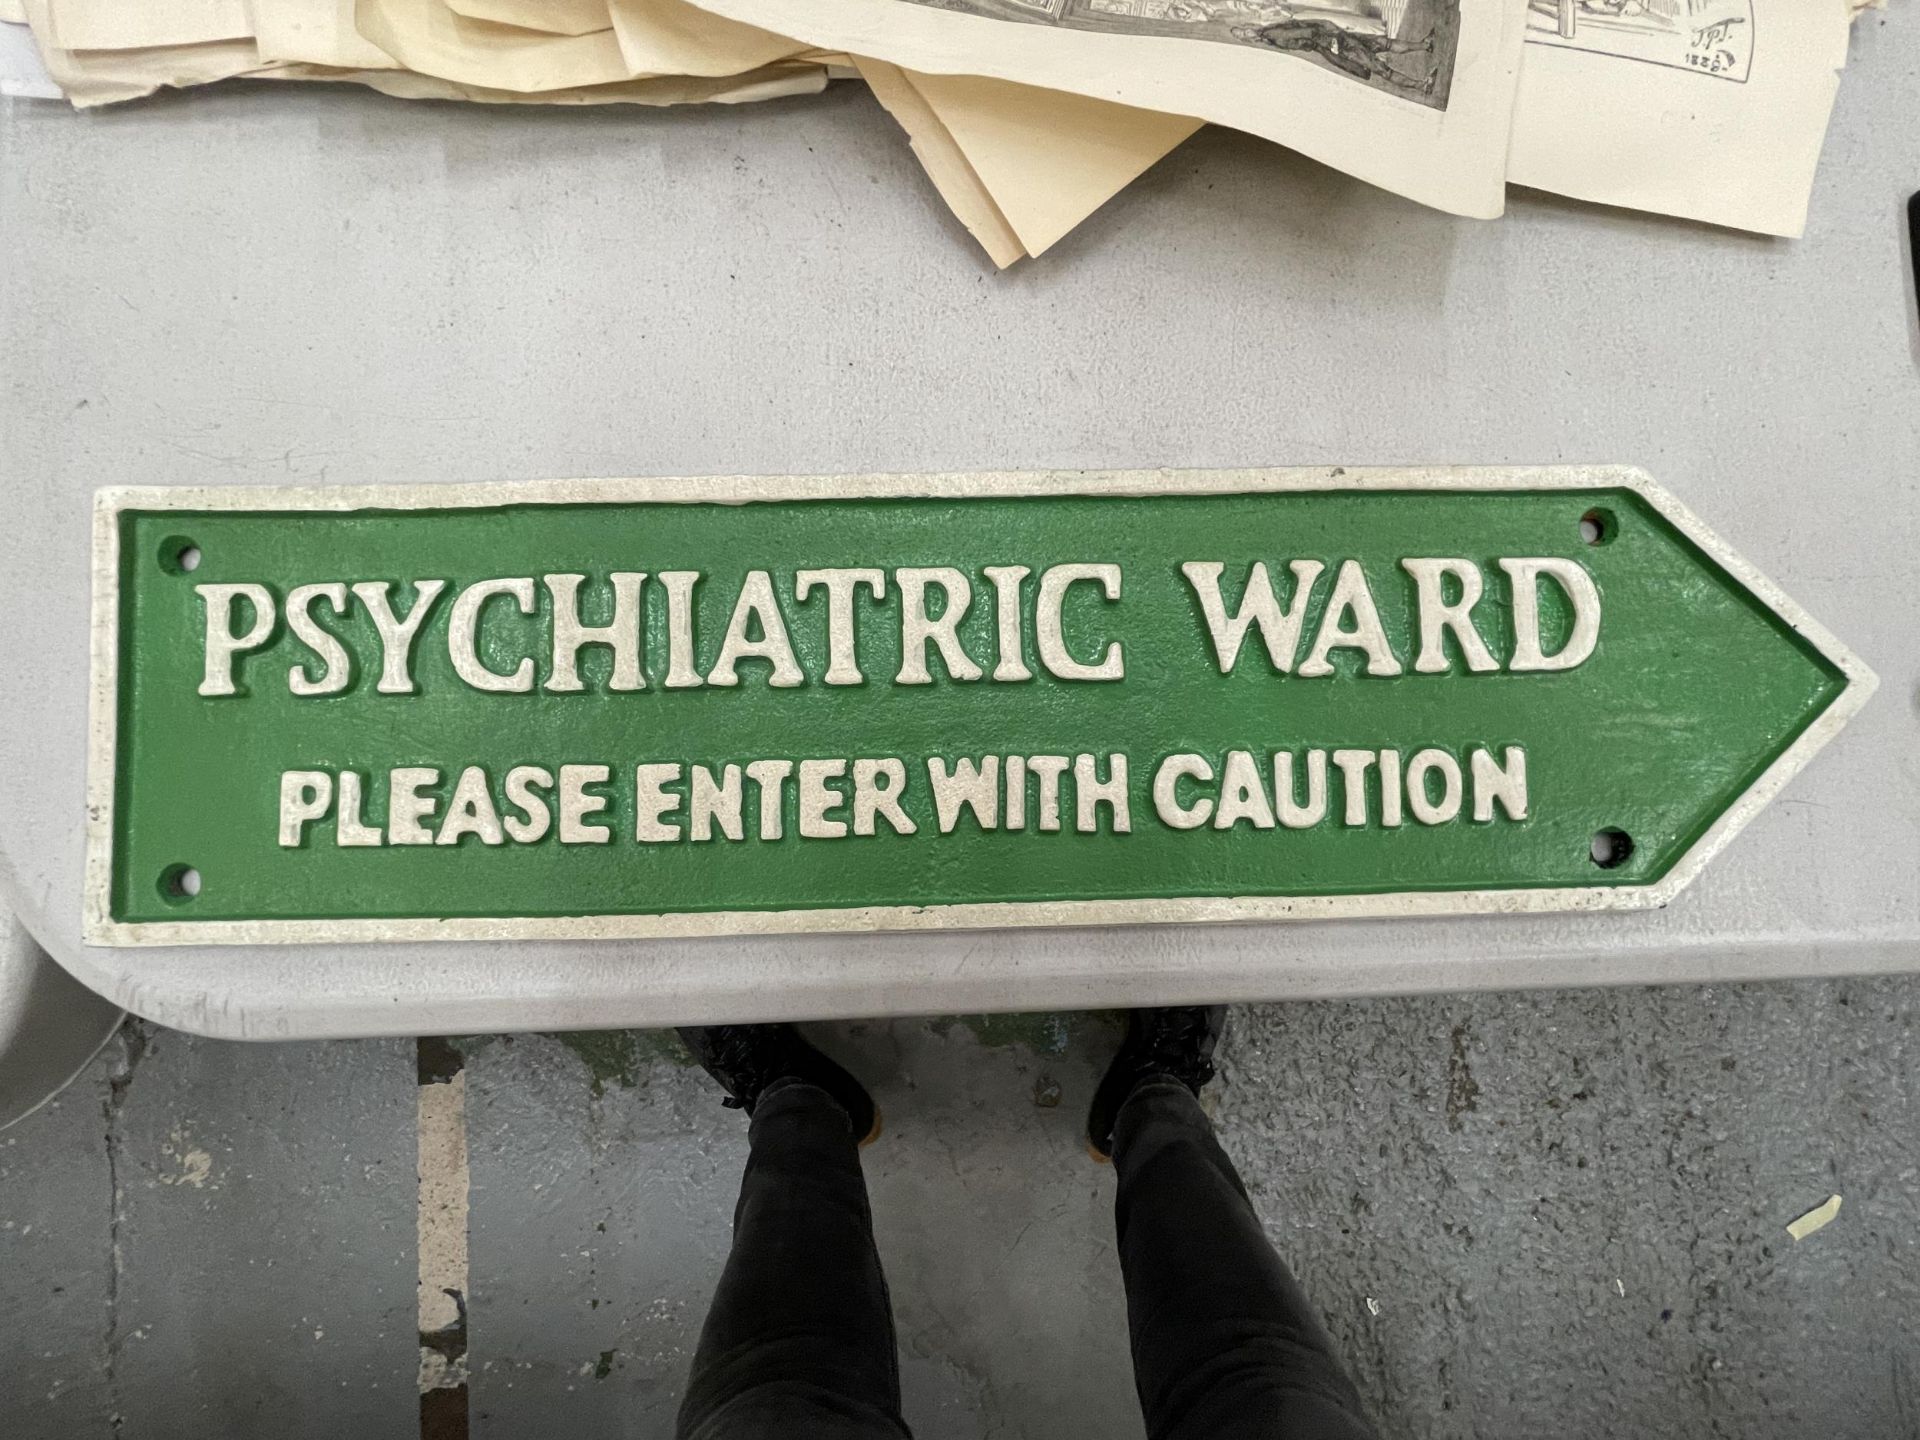 A CAST 'PSYCHIATRIC WARD' SIGN